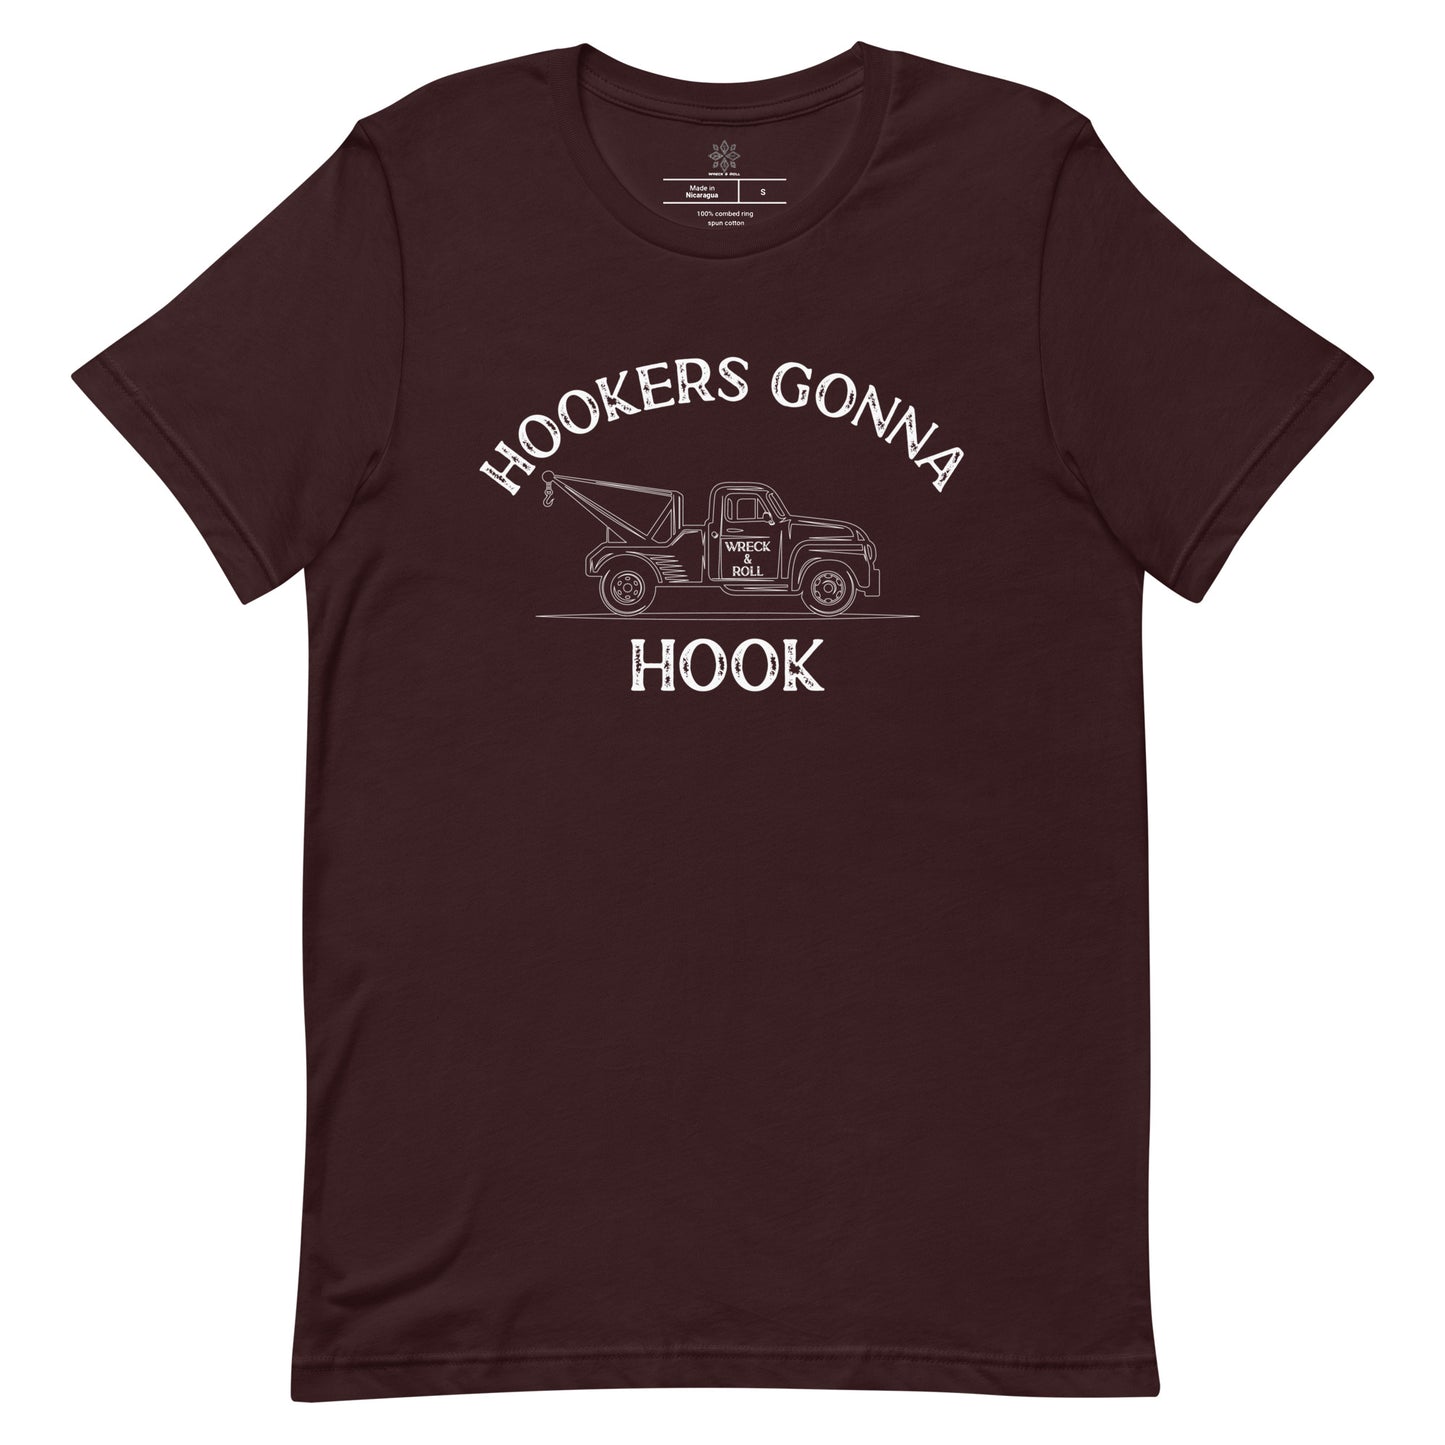 Hookers Gonna Hook Unisex t-shirt